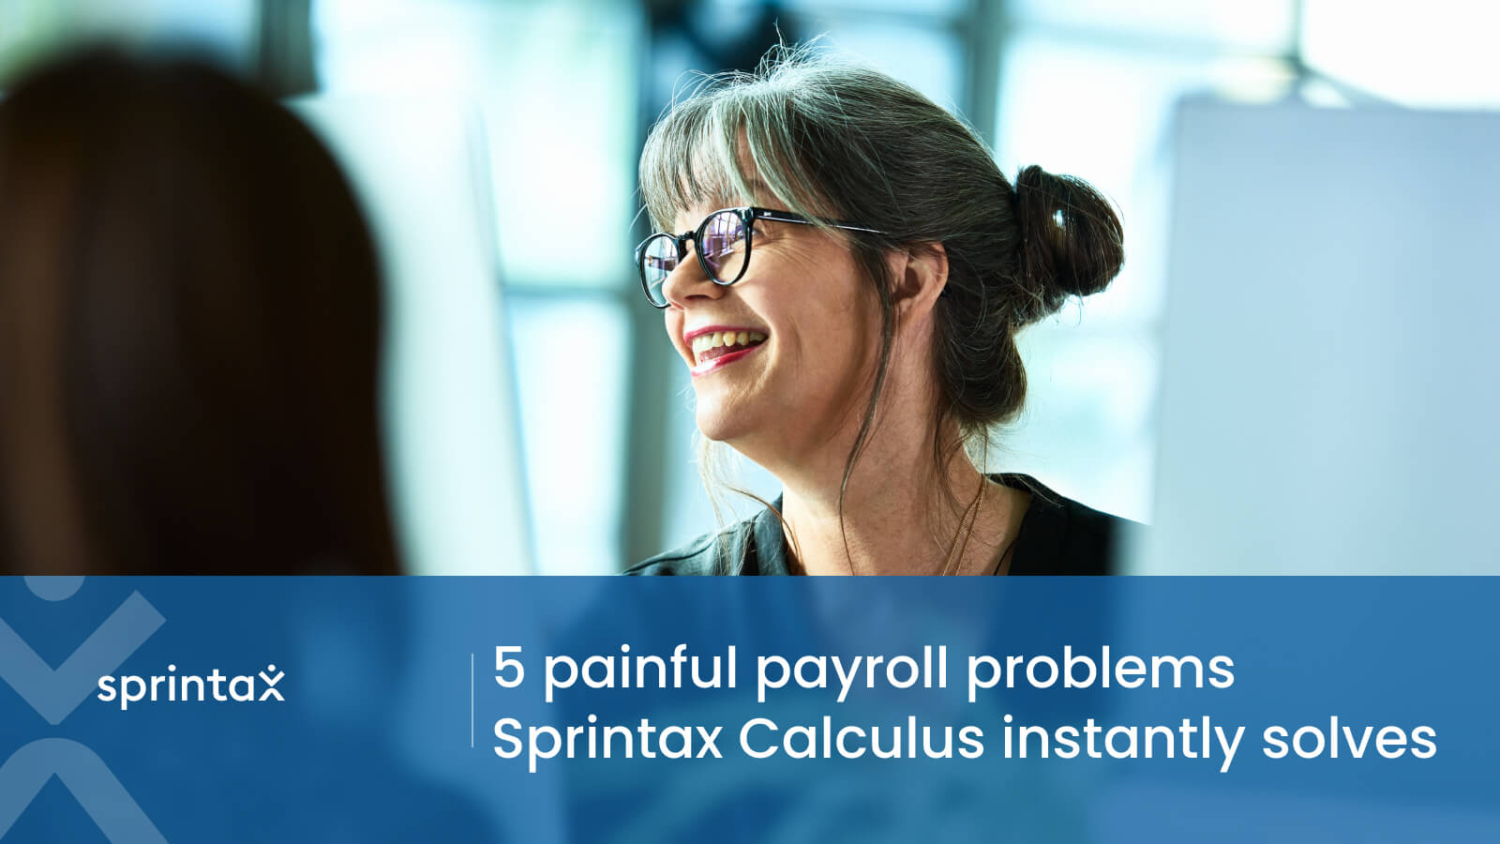 Sprintax Calculus solves payroll problems